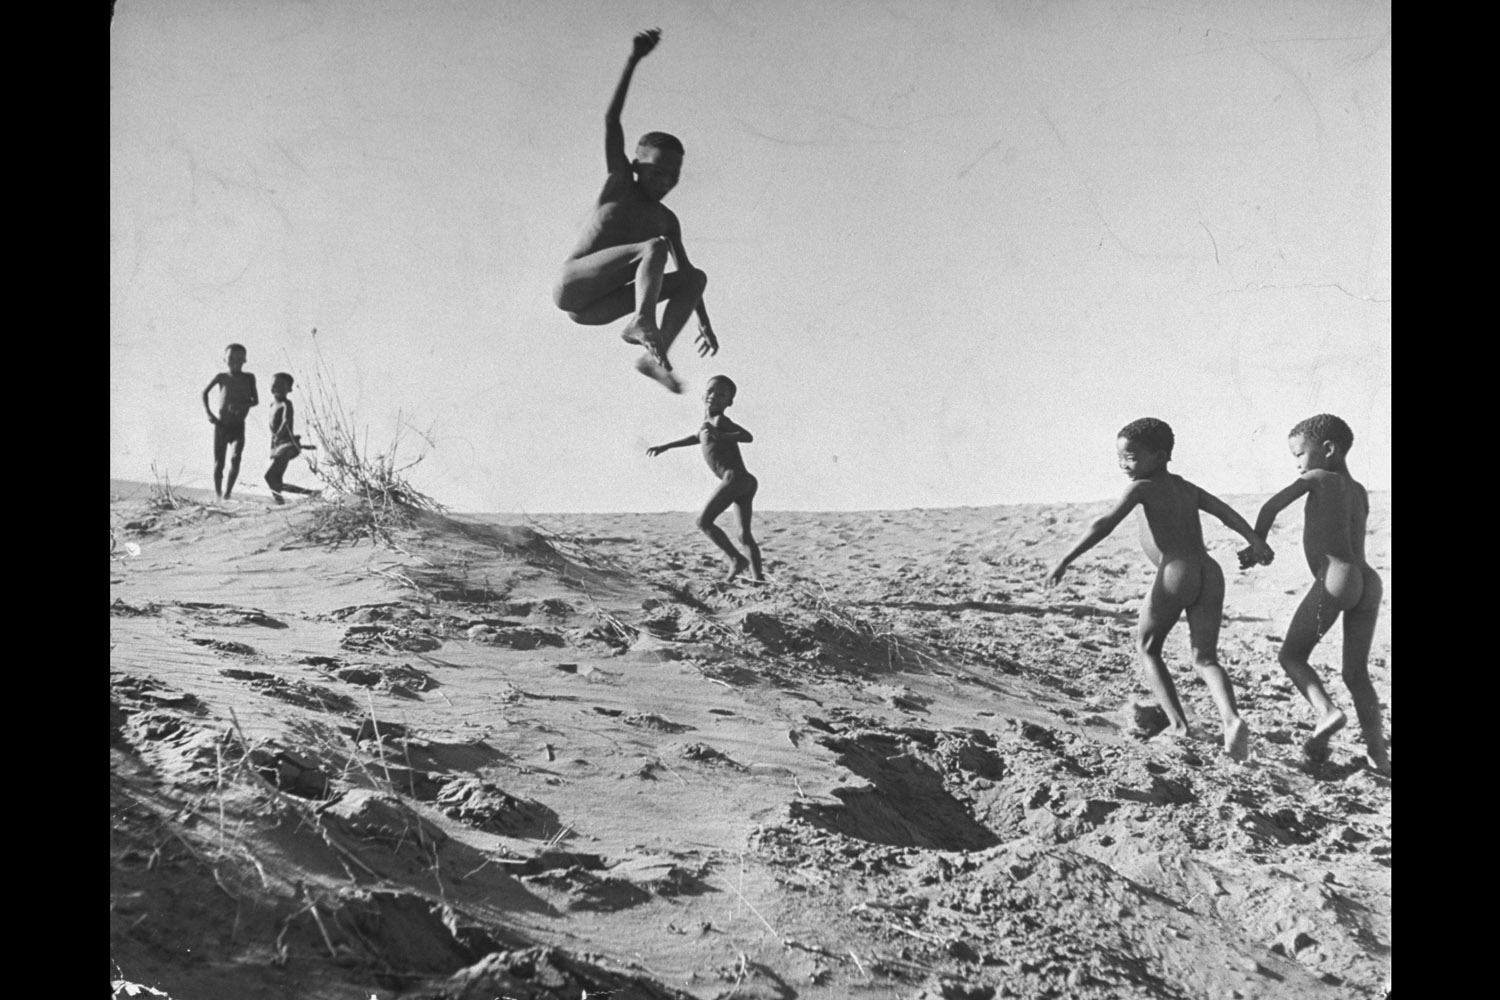 Bushman children playing games on sand dunes, 1947.